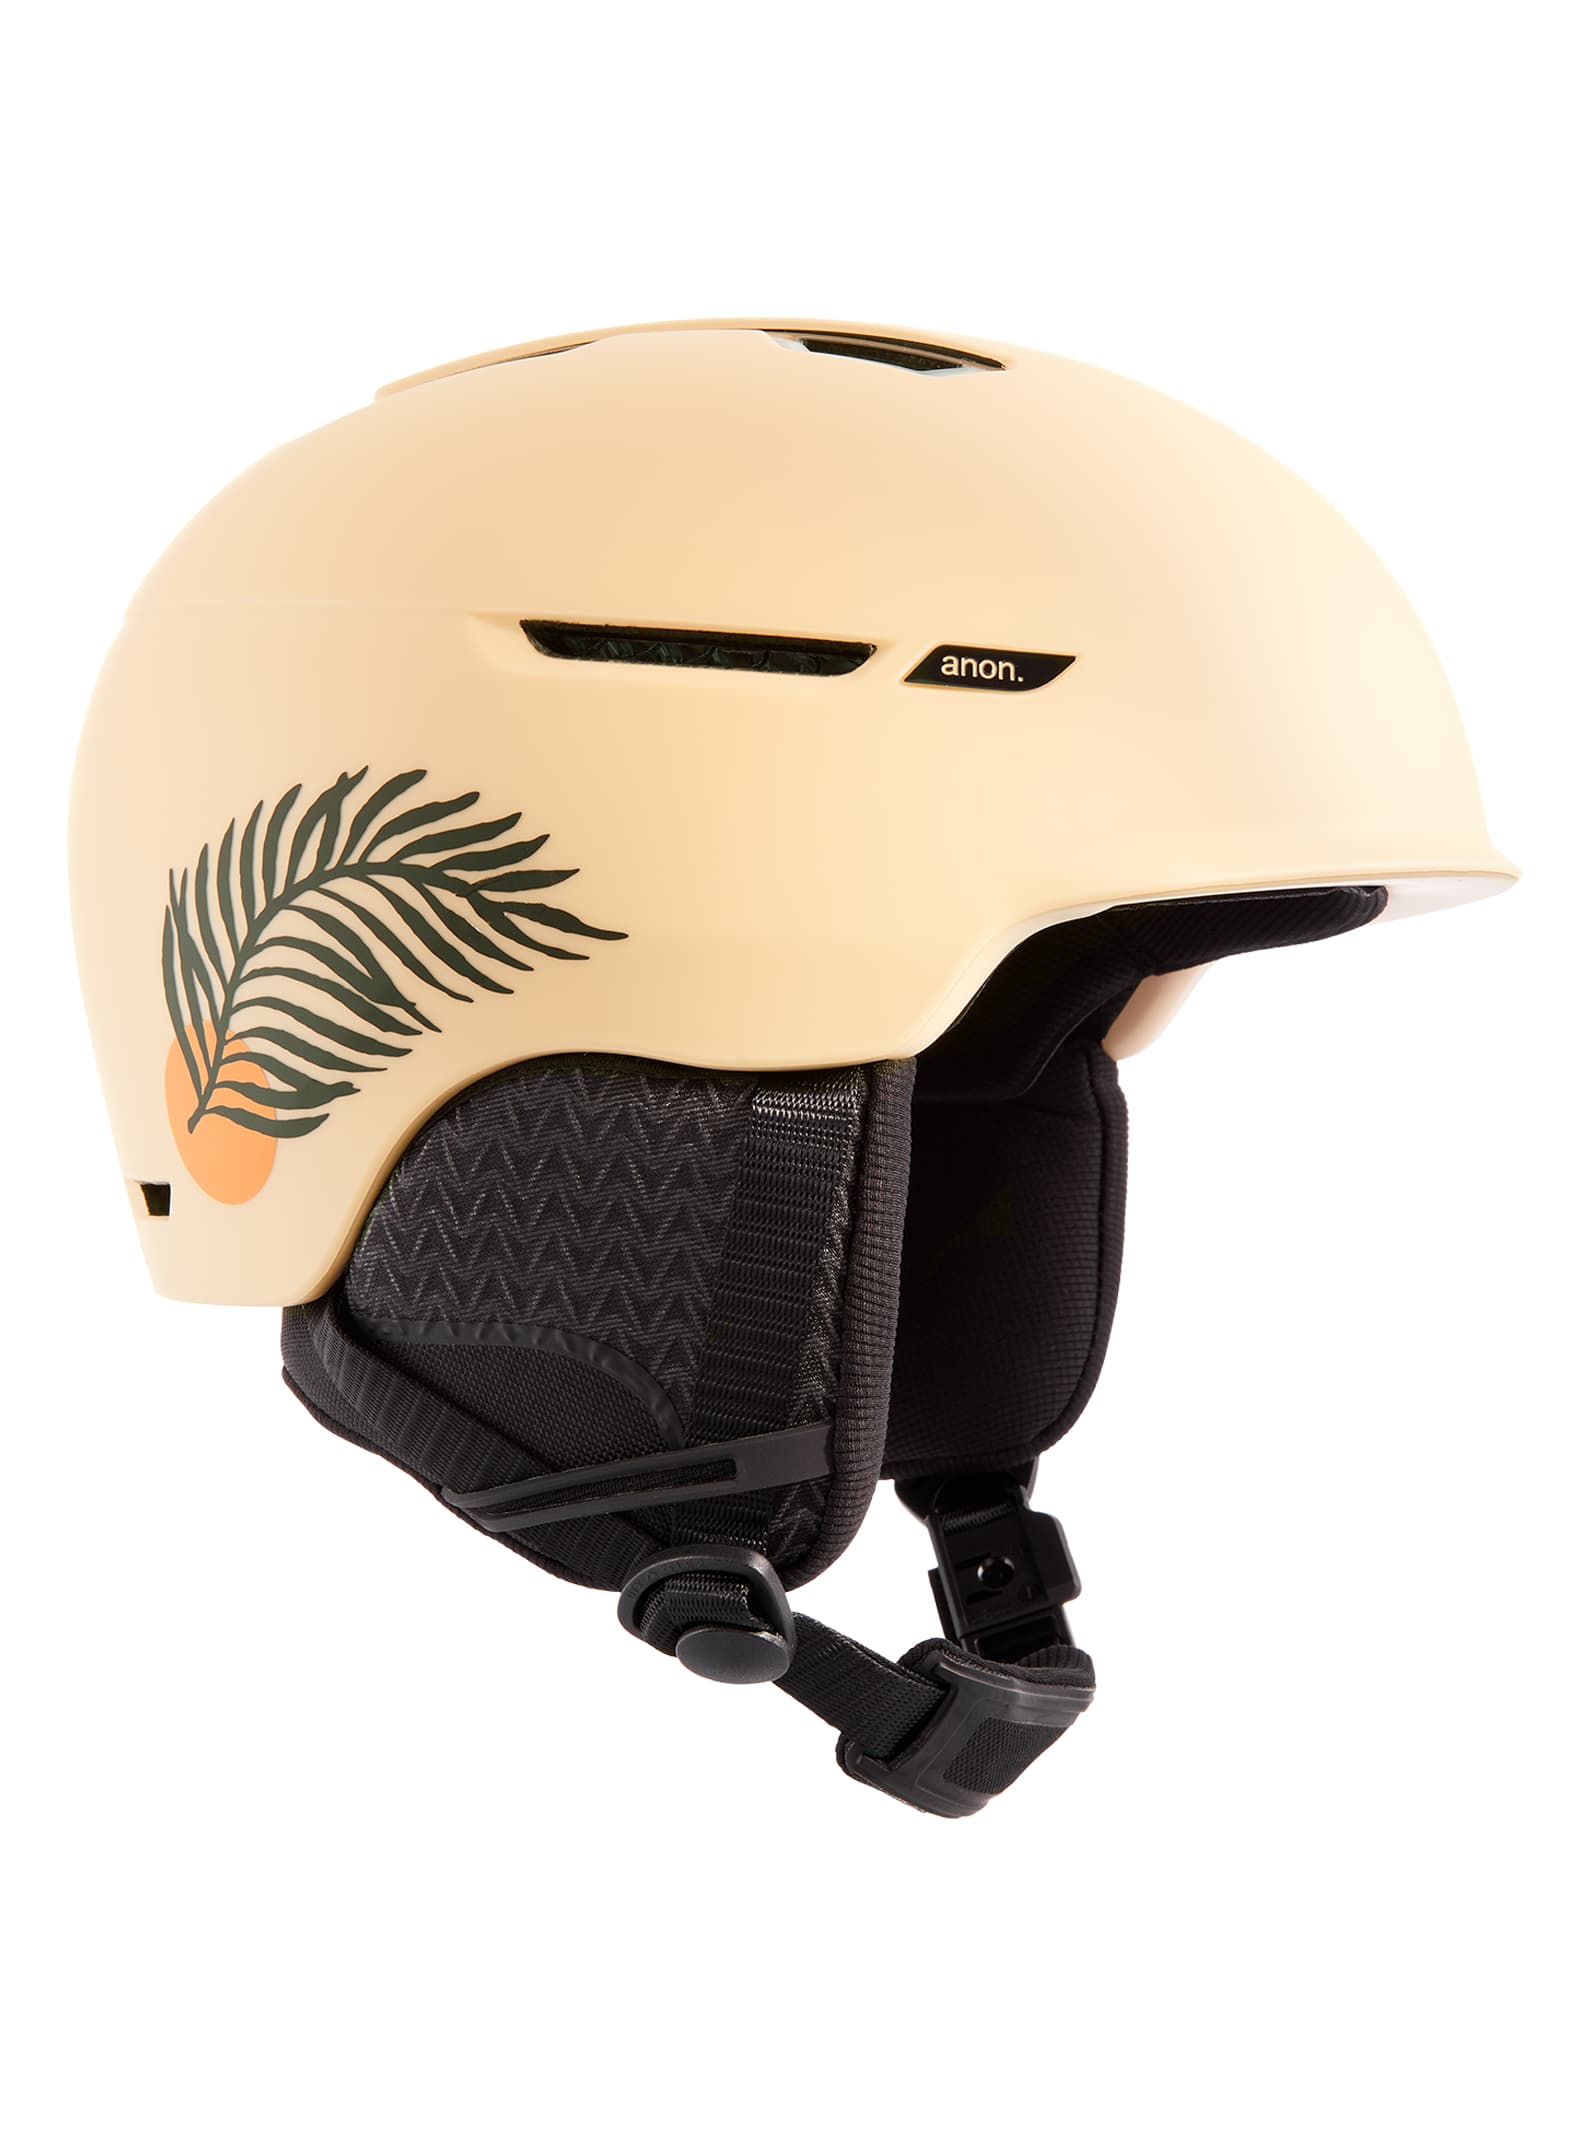 Logan WaveCel Helmet | Burton.com Winter 2022 US